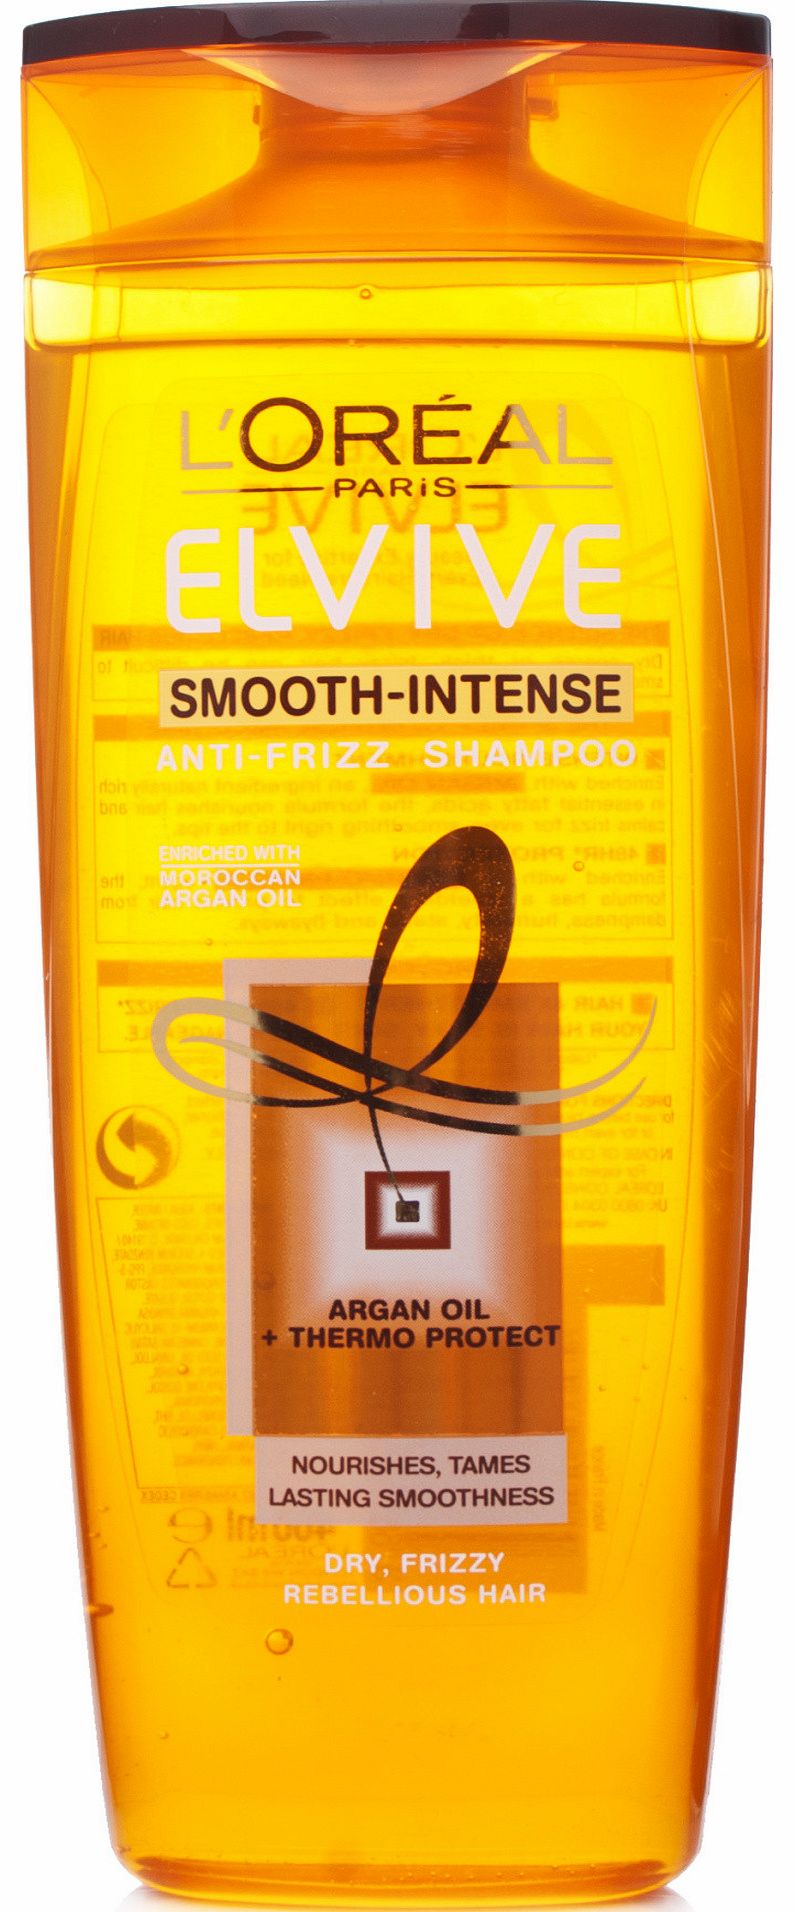 L'Oreal Elvive Smooth-Intense Shampoo